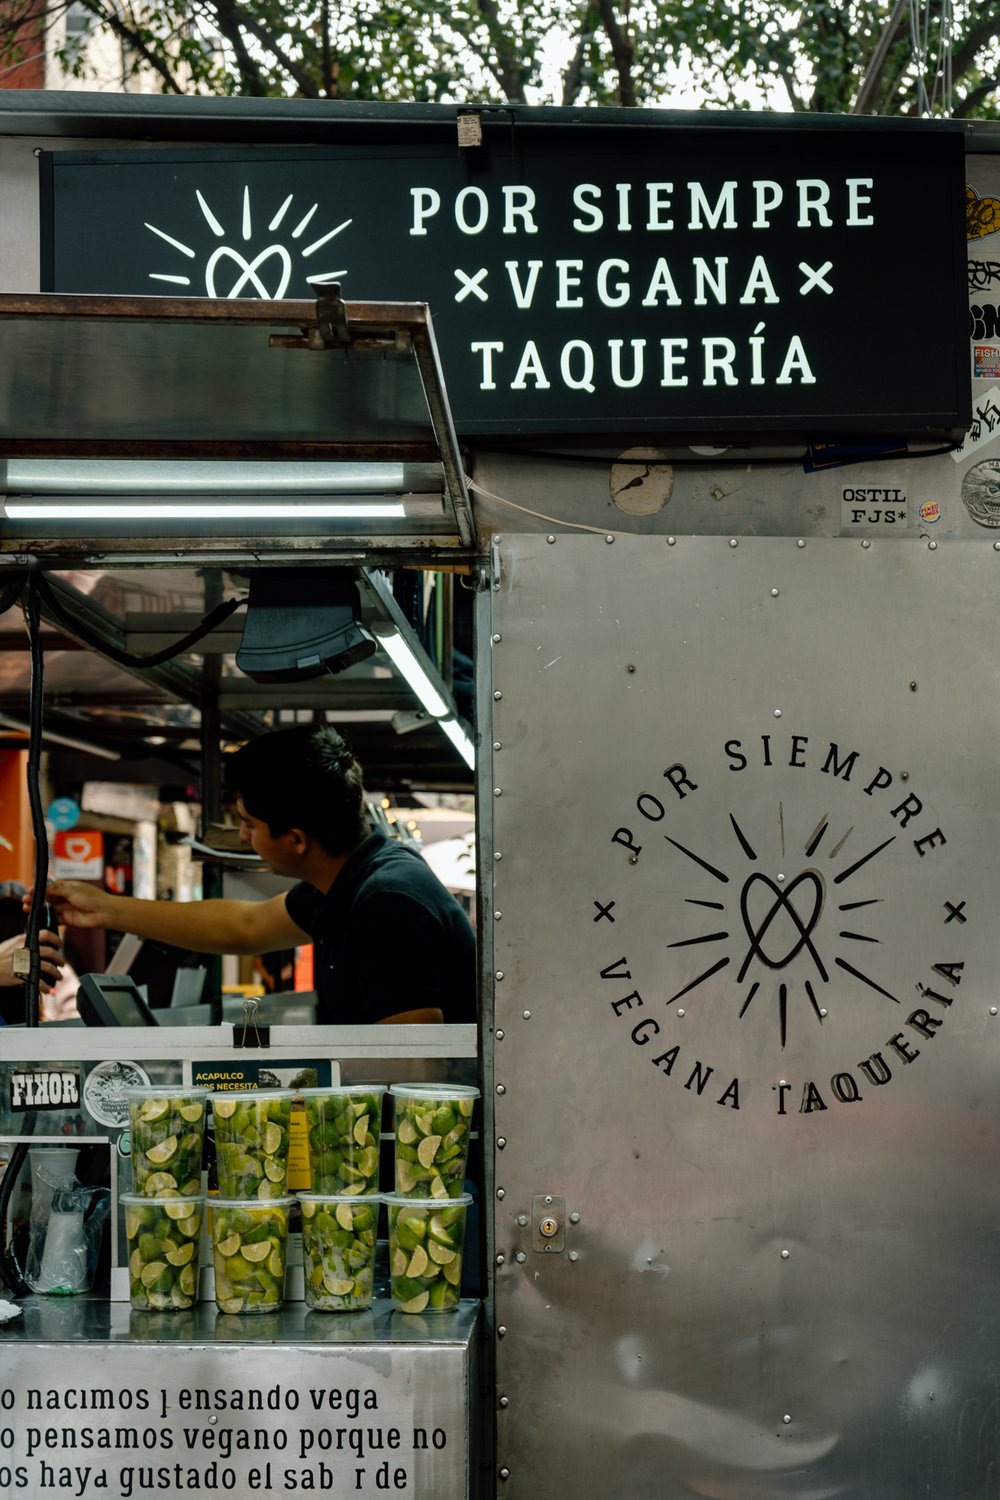 vegan taqueria at Por Siempre in Mexico City